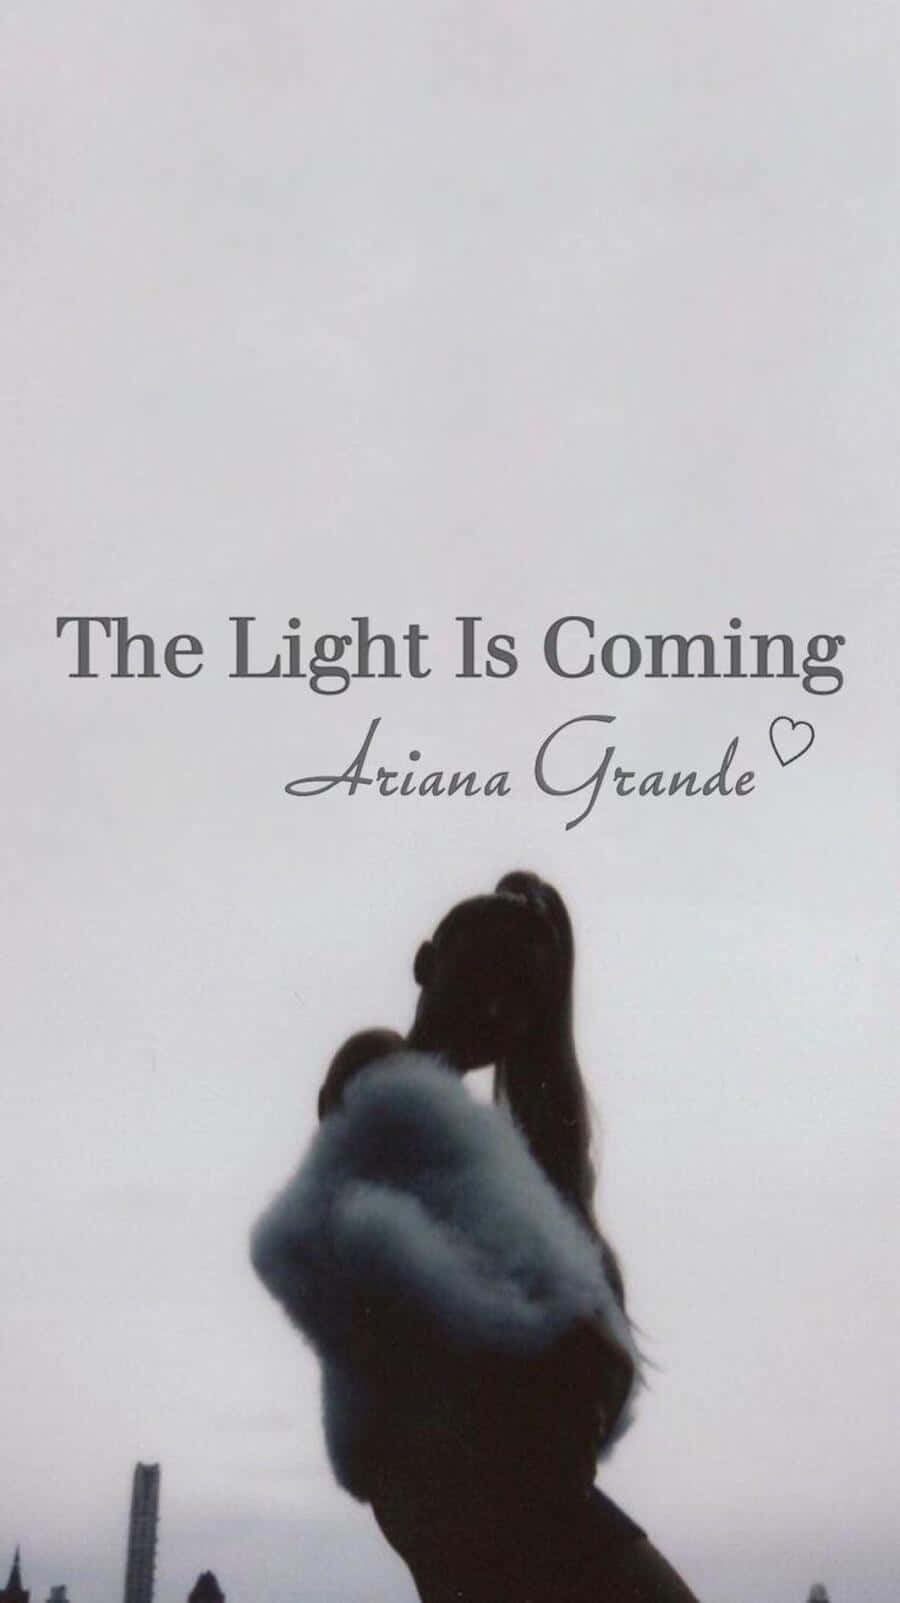 Ariana Grande's Stunning Aesthetic Photography Wallpaper